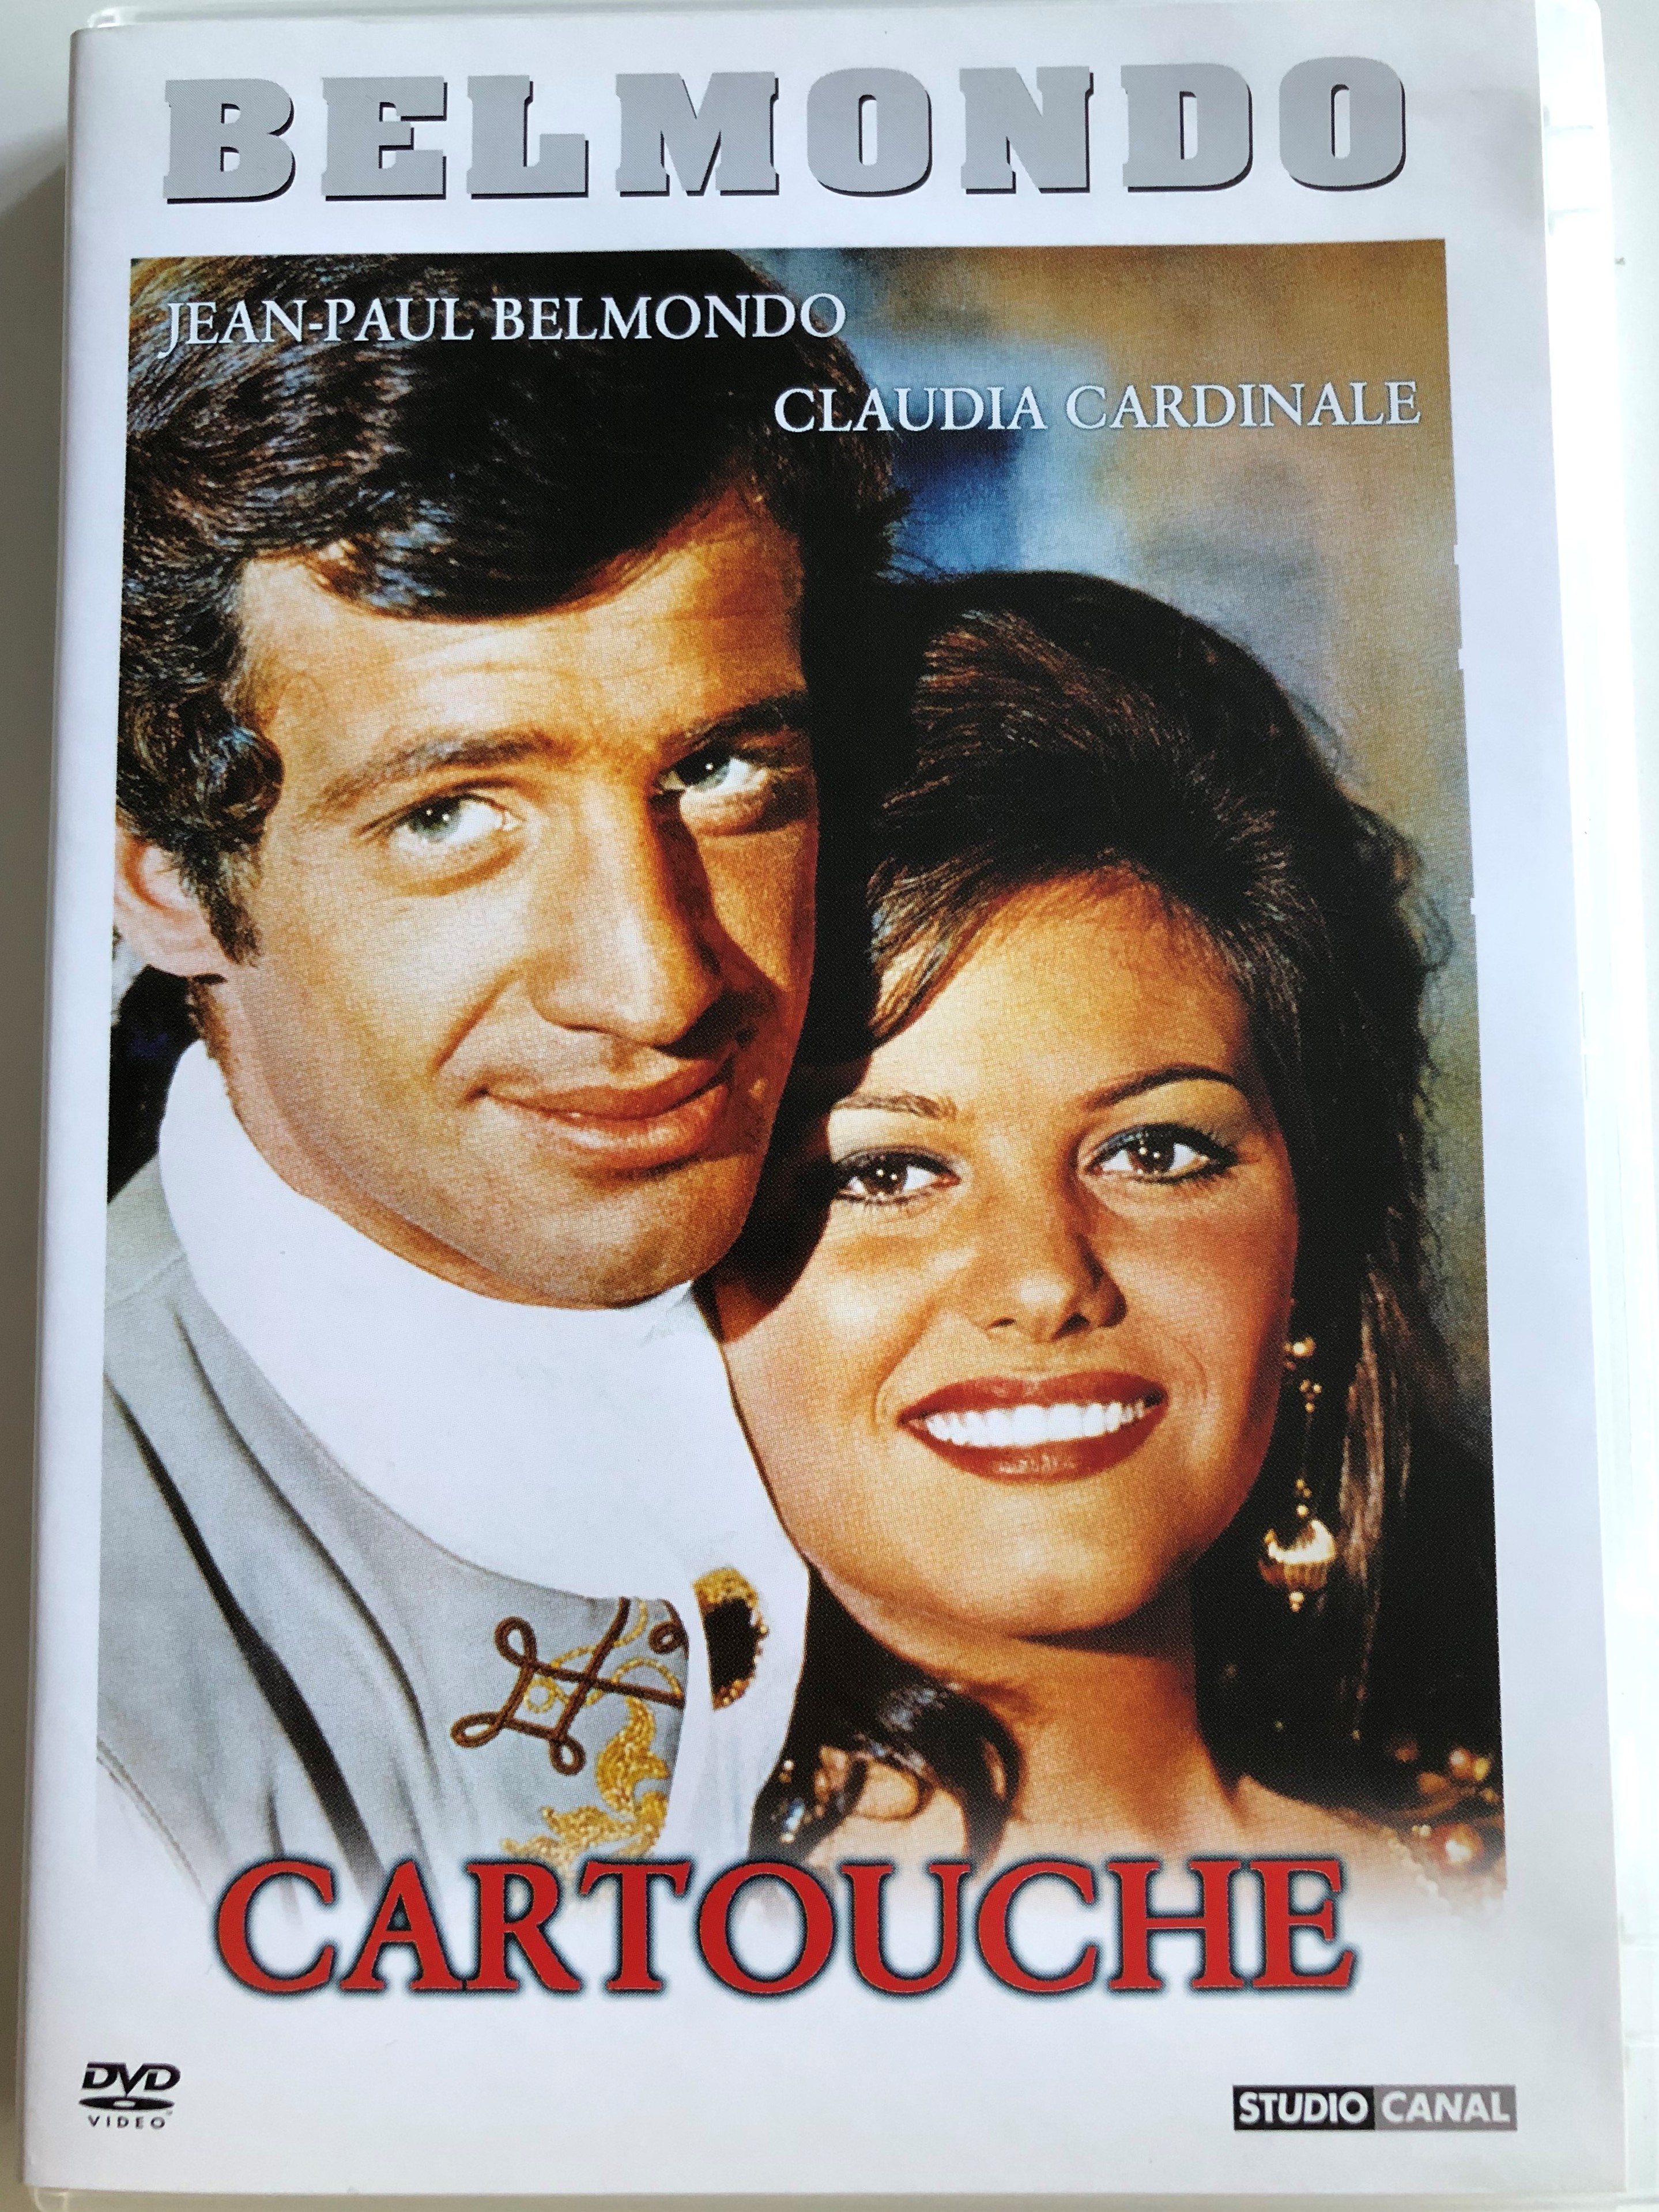 cartouche-dvd-1975-directed-by-philippe-de-broca-starring-jean-paul-belmondo-claudia-cardinale-jess-hahn-marcel-dalio-jean-rochfort-philippe-lemaire-1-.jpg